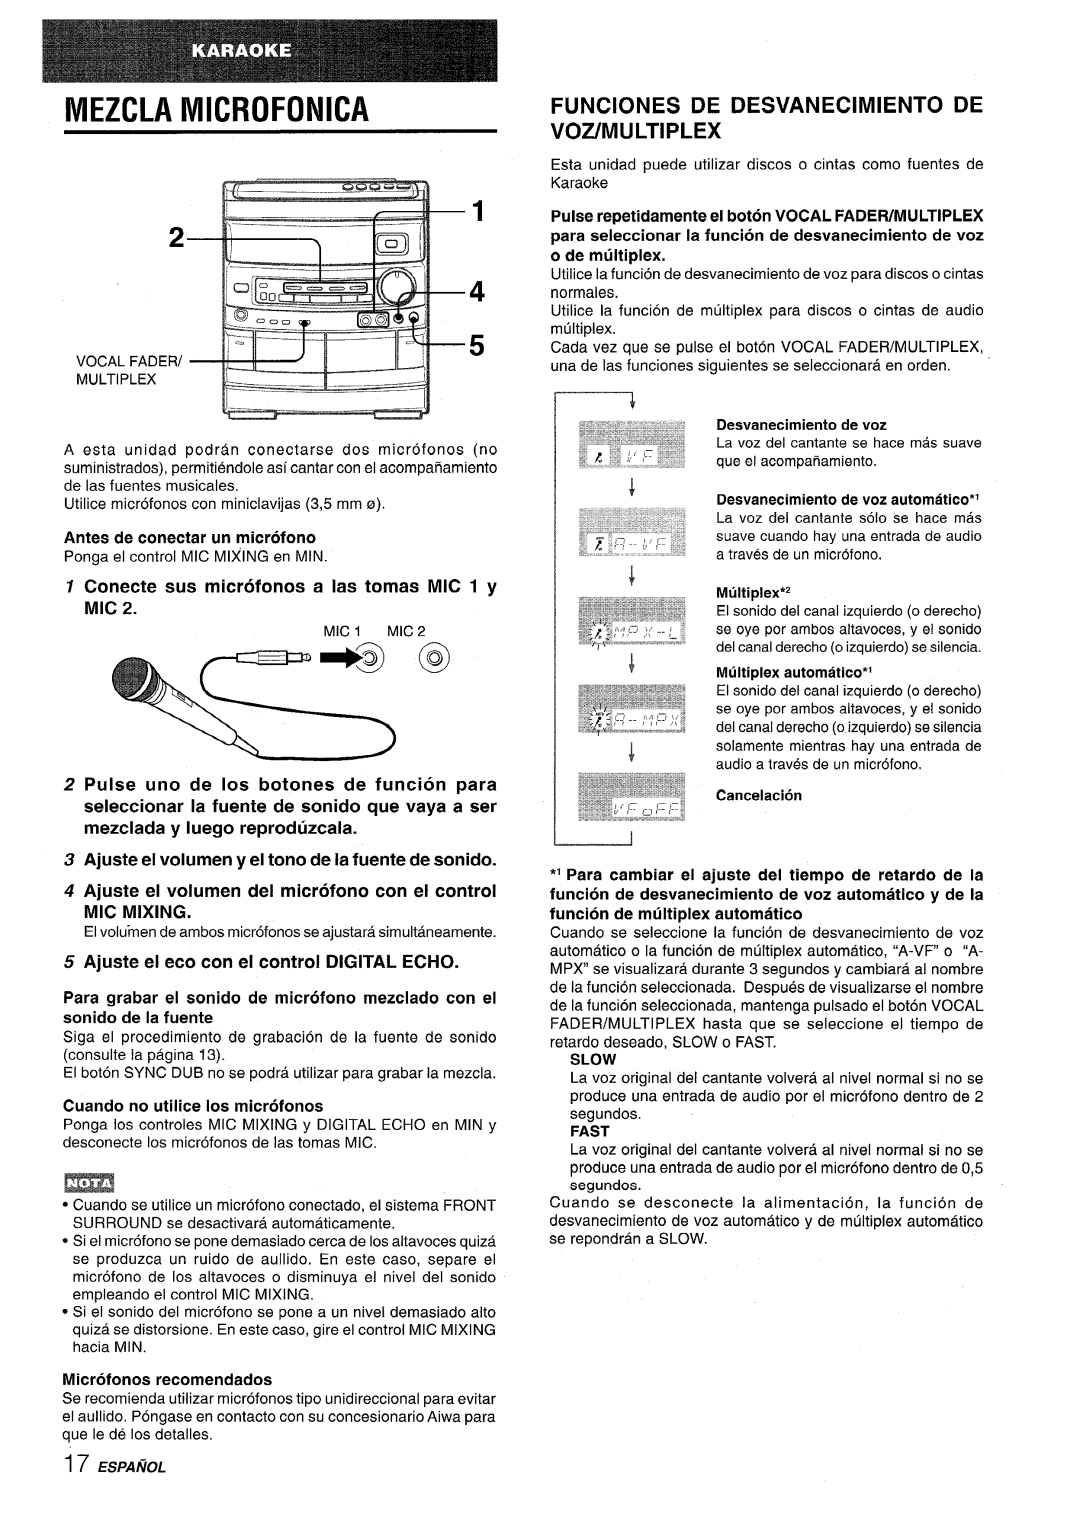 Aiwa CX-NV8000 manual Mezcla Microfonica, FUNClONES DE DESVANECIMIENTO DE VOiYMULTIPLEX, Antes de conectar un microfono 